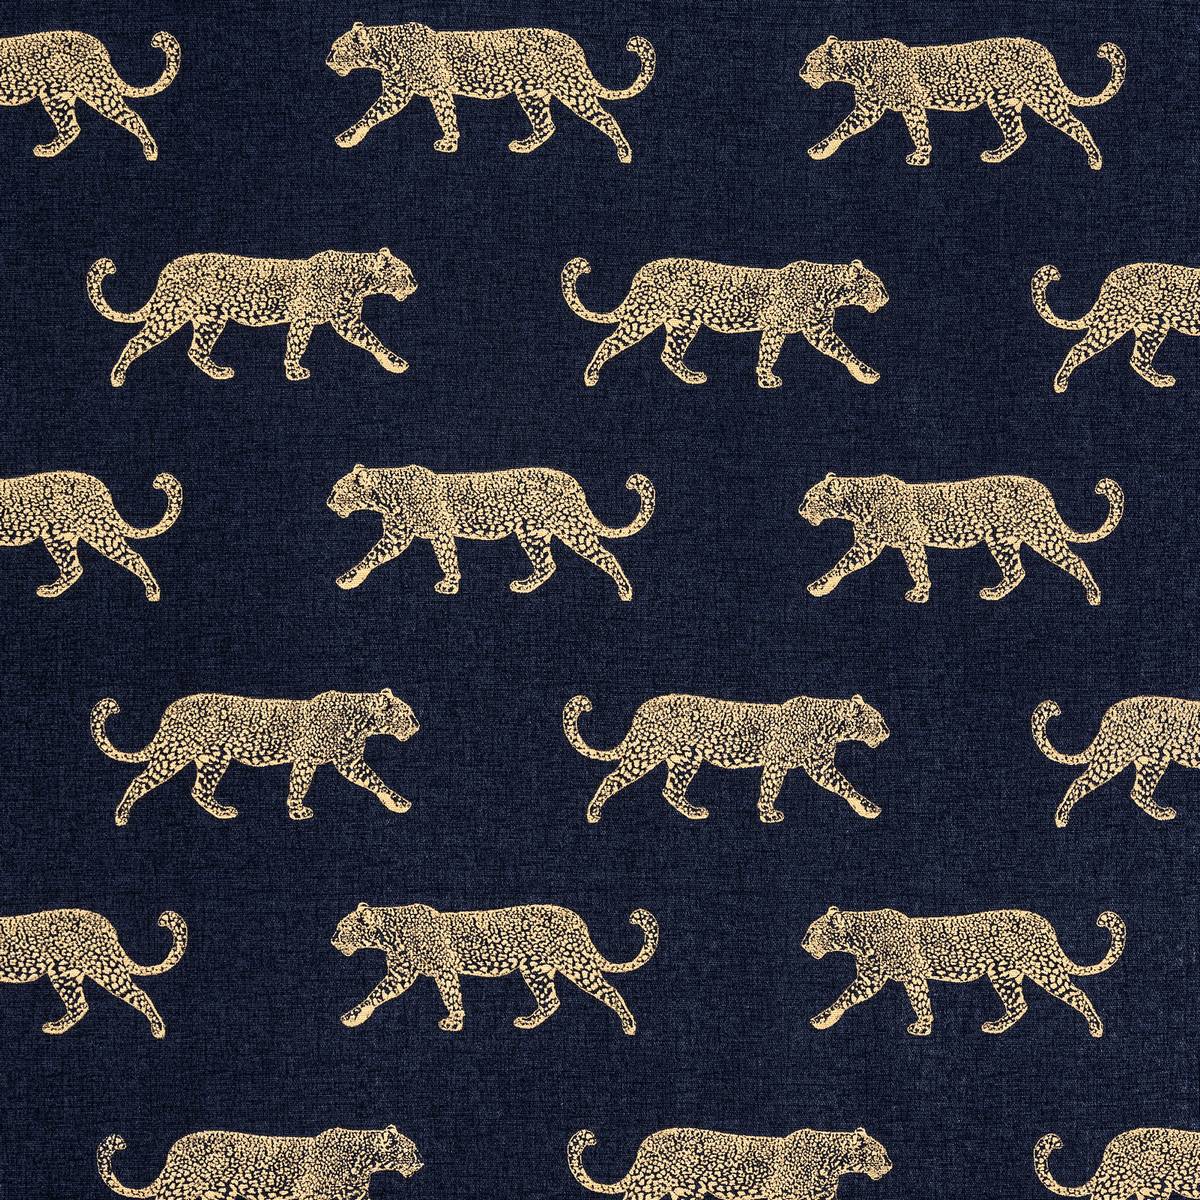 Leopard Panama Indigo Fabric by Fryetts